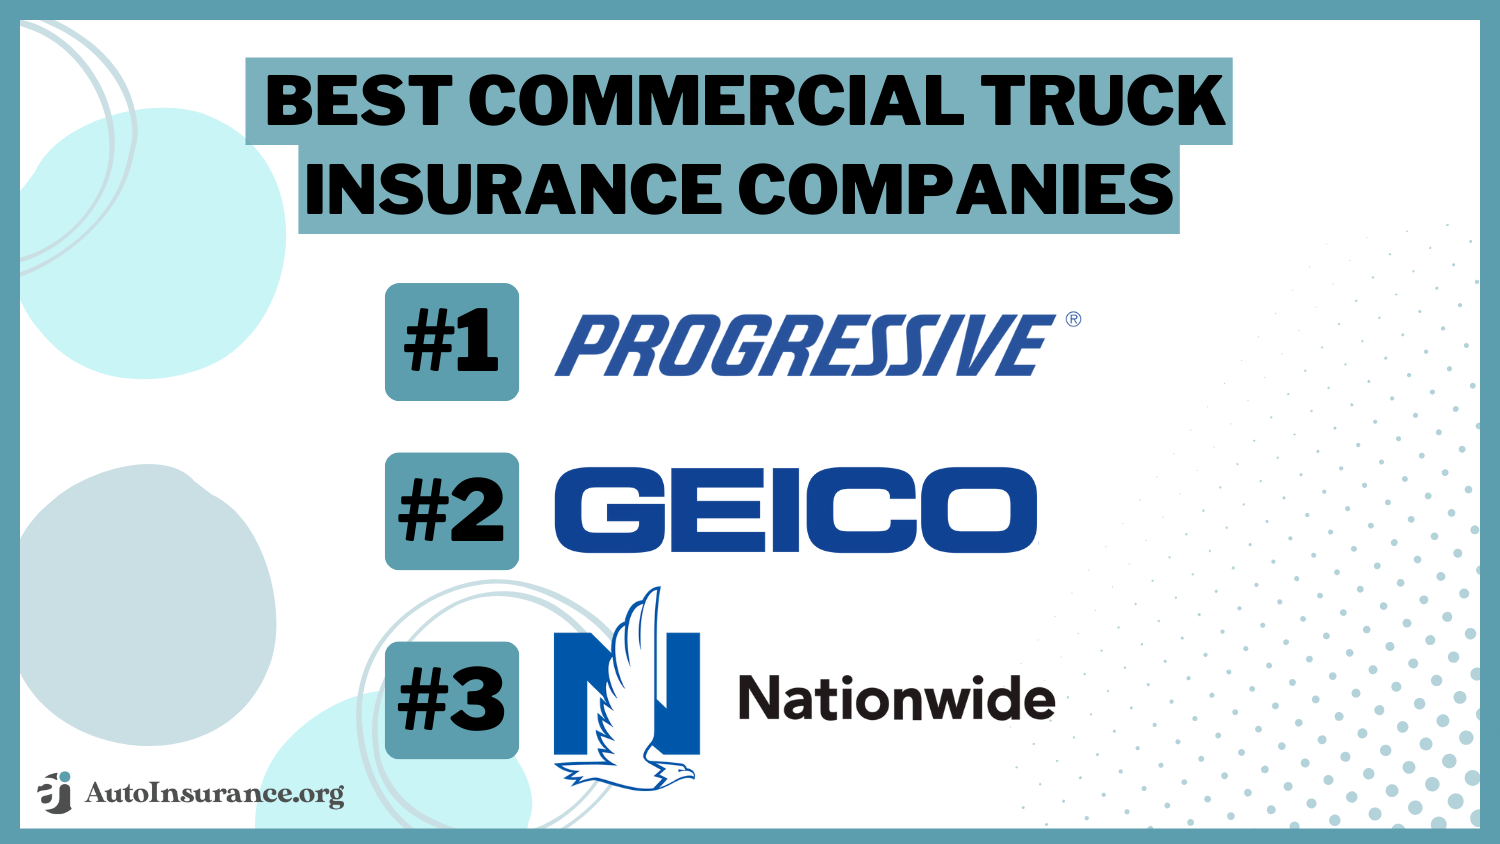 Best Commercial Truck Insurance Companies: Progressive, Geico, Nationwide